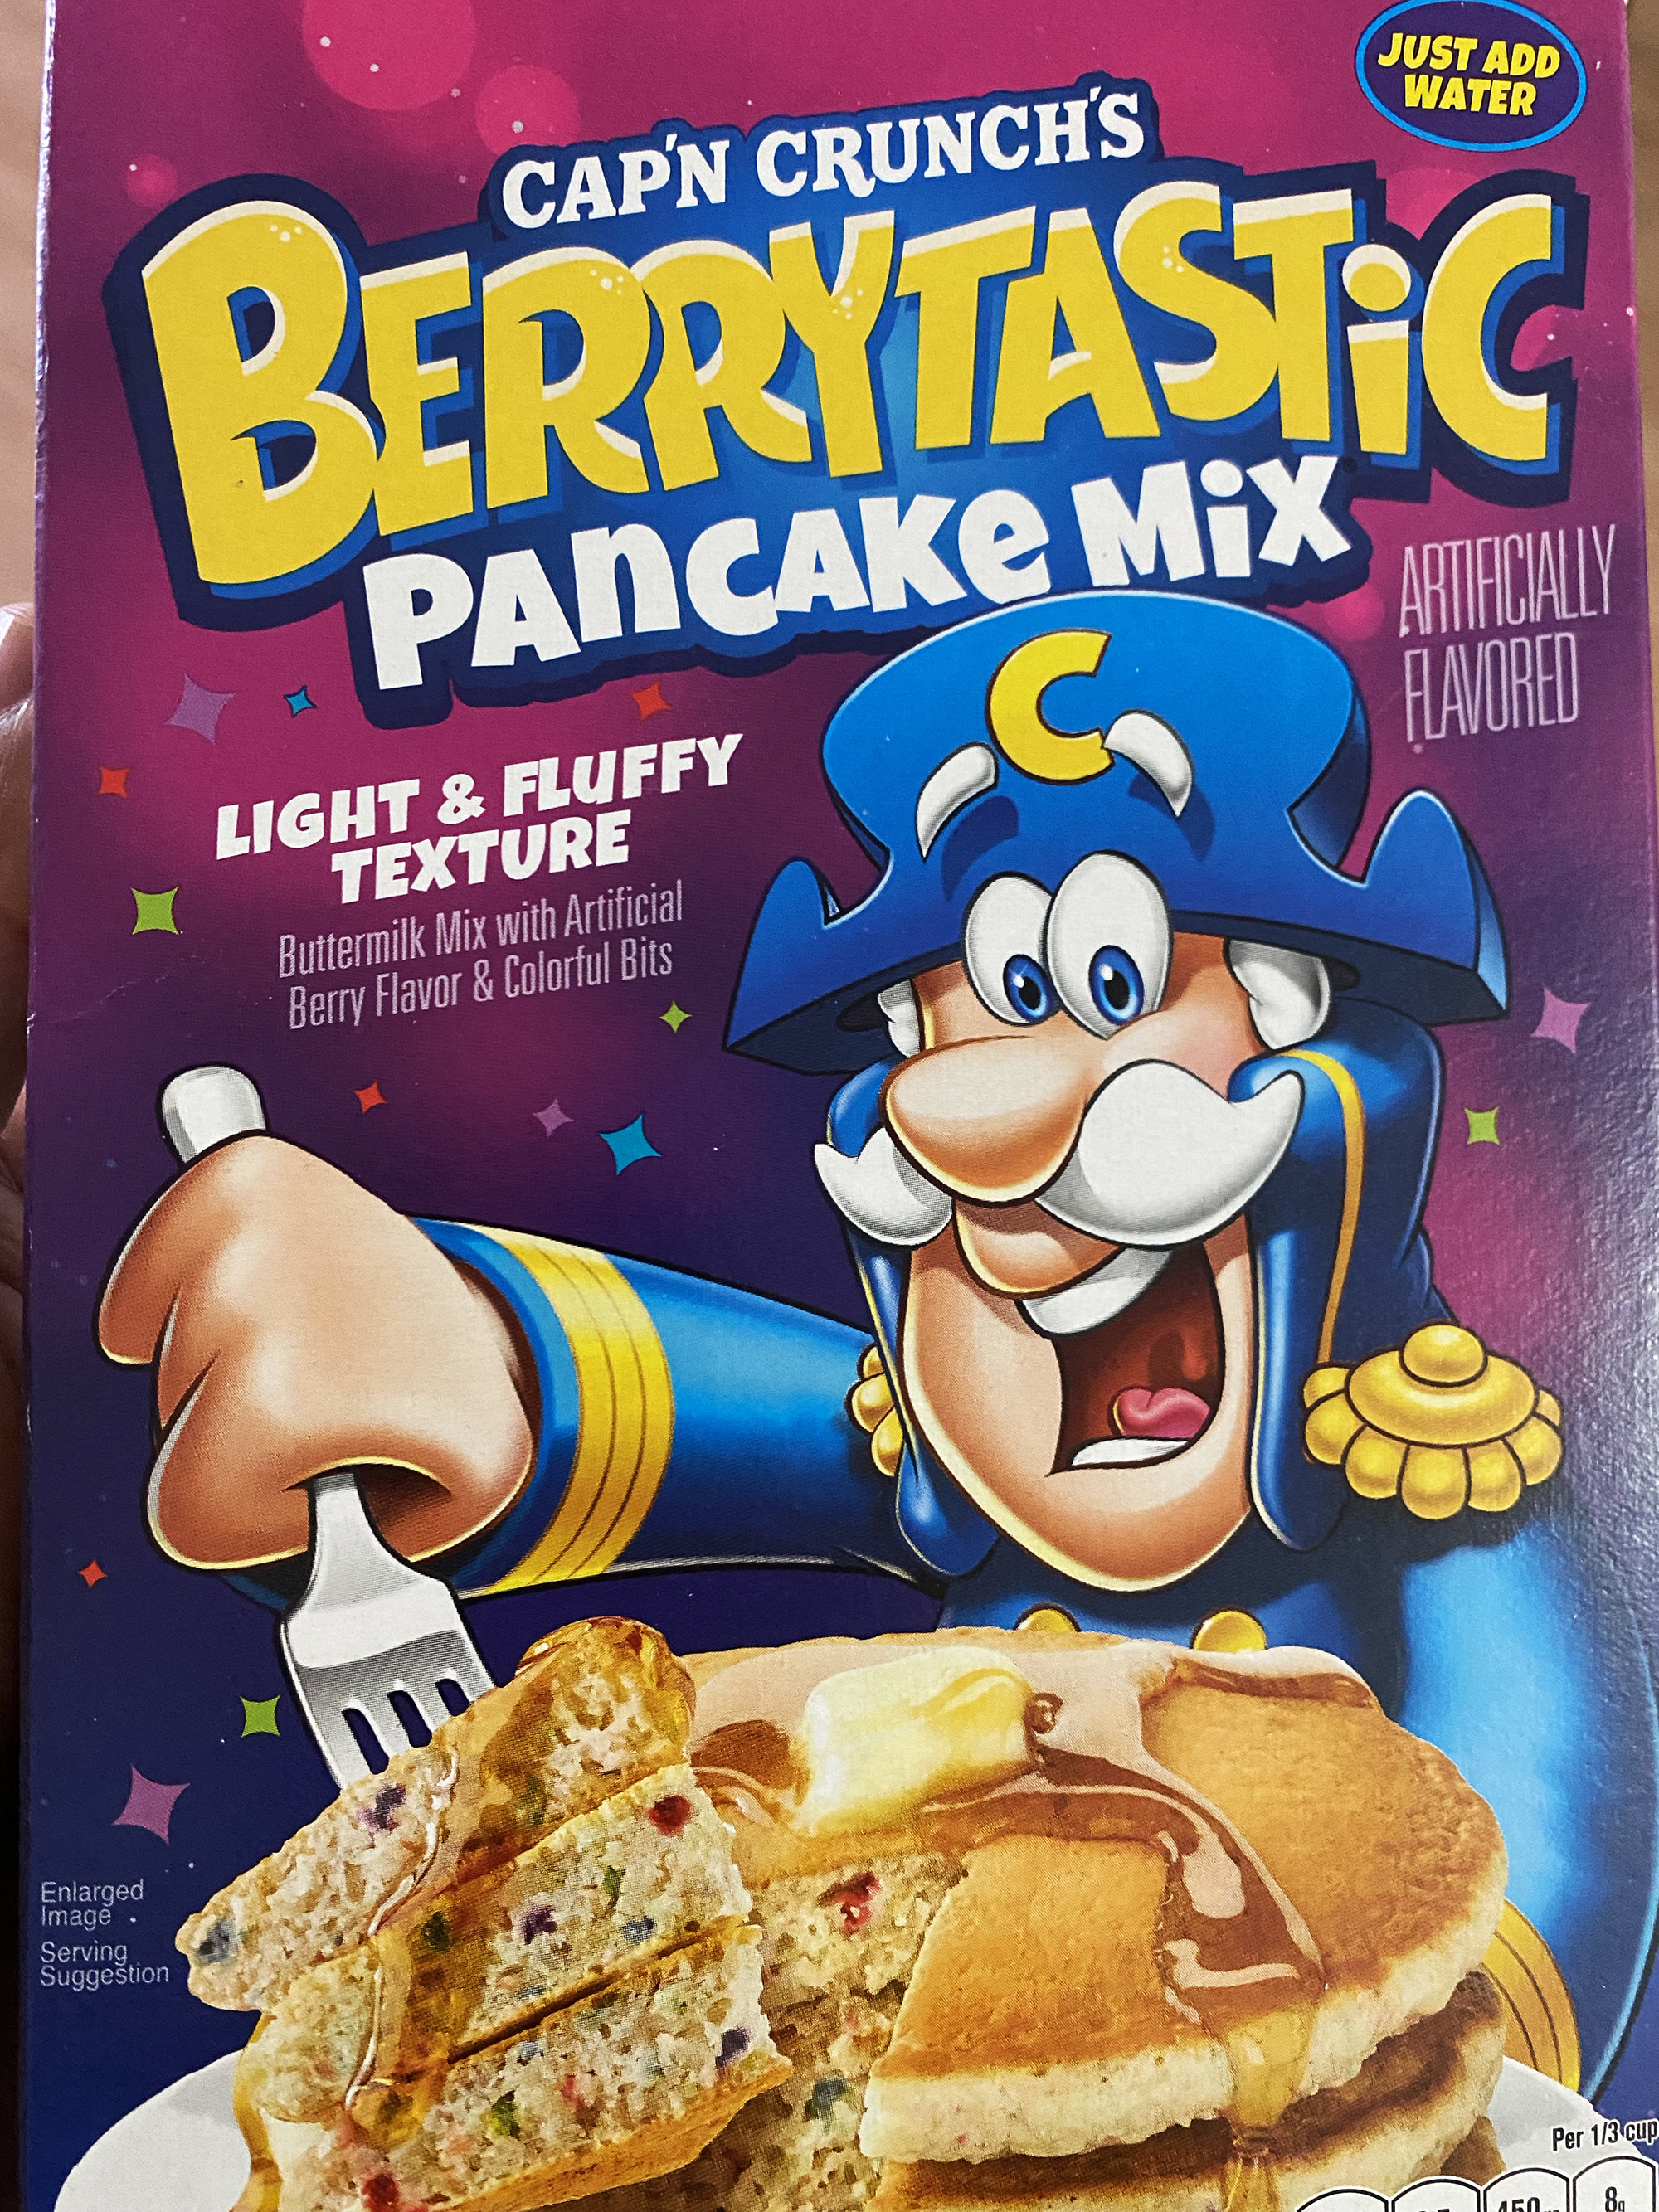 Cap&#x27;n Crunch Berrytastic Pancake Mix box